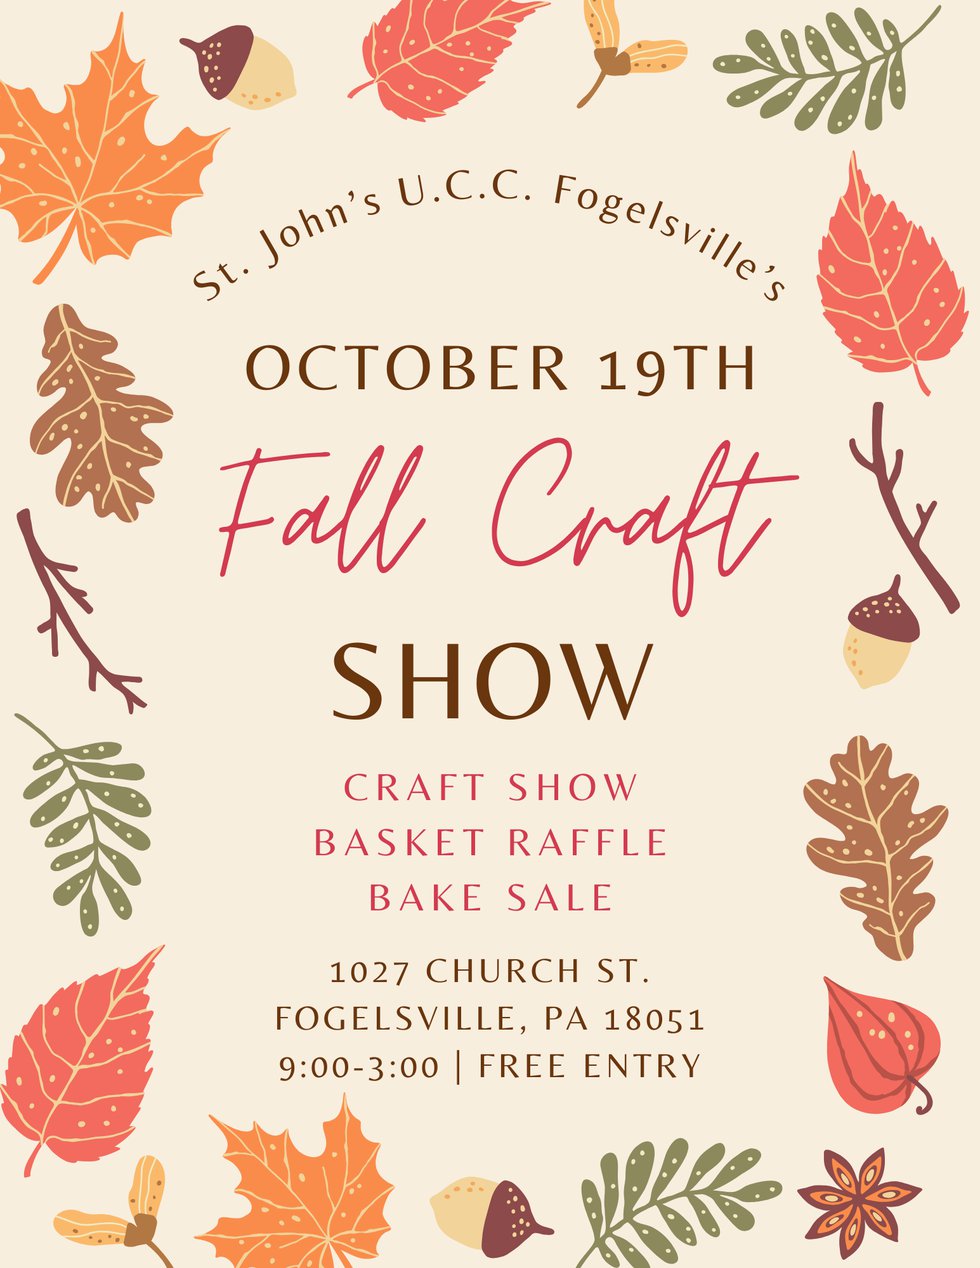 St. John's U.C.C. Fogelsville's Fall Craft Show - 2